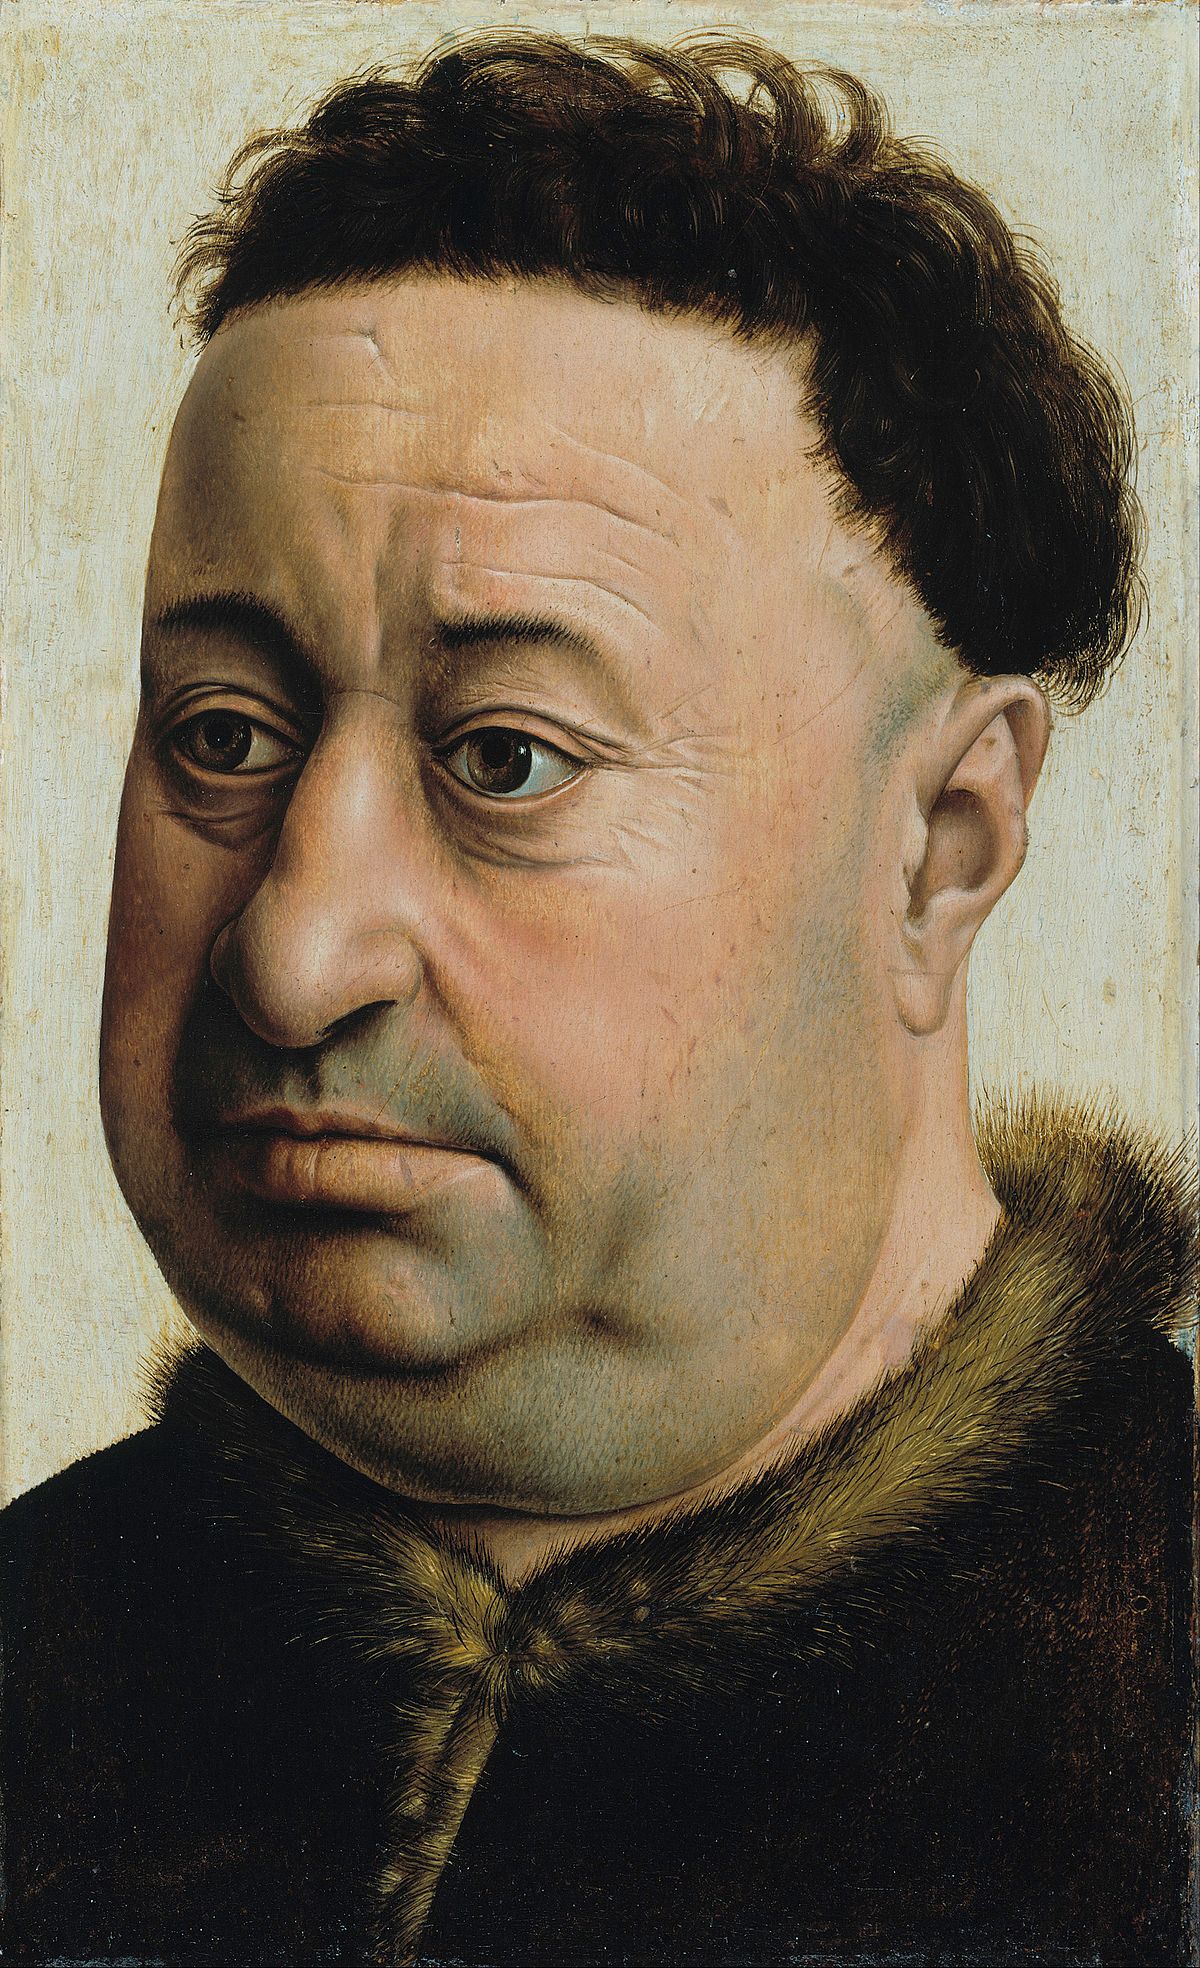 Portrait of a Fat Man - Wikipedia